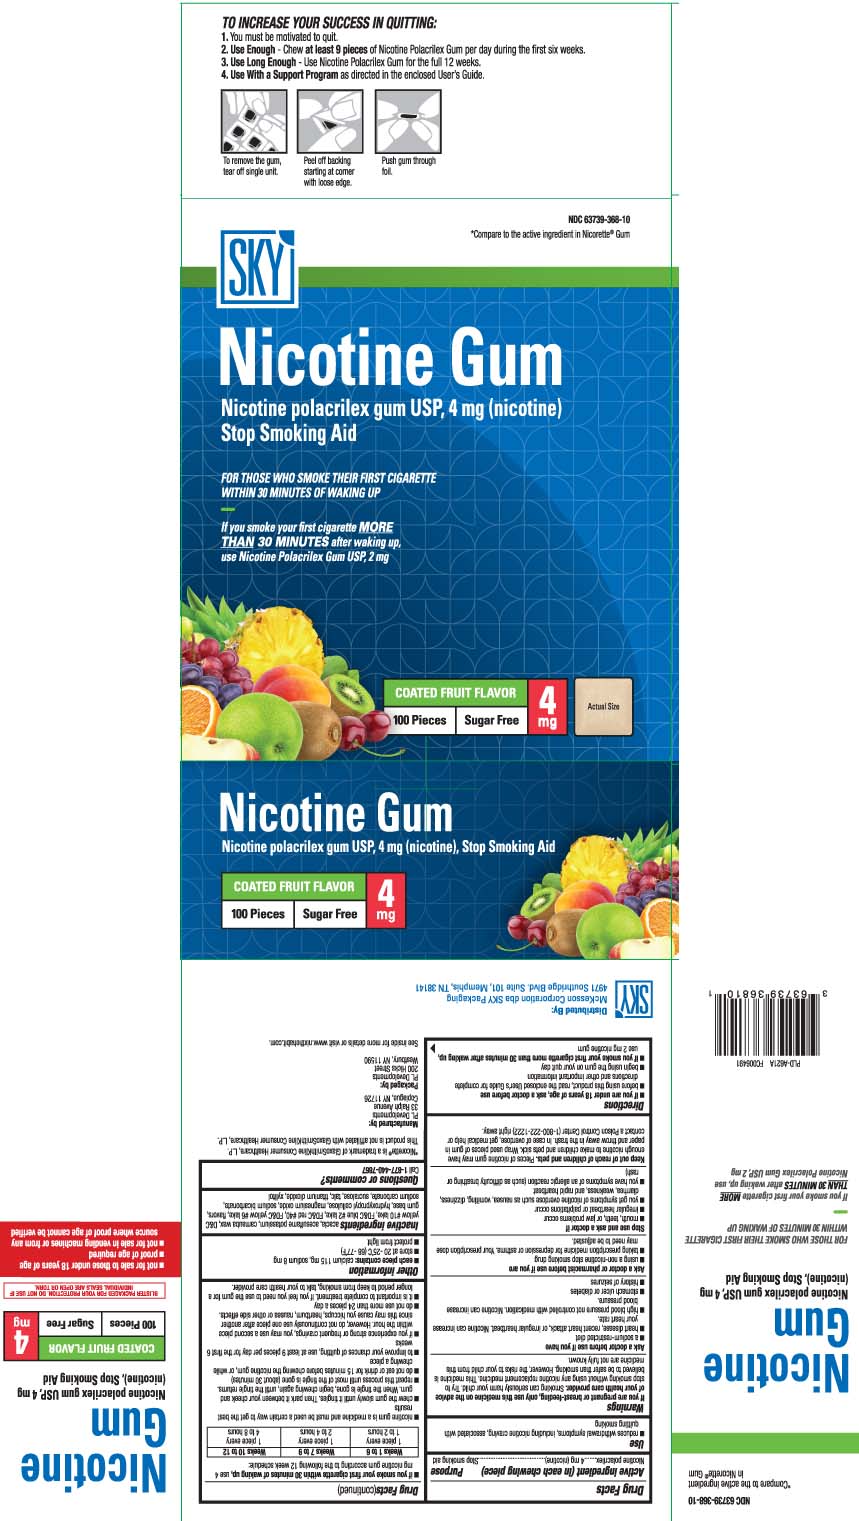 Nicotine polacrilex 4 mg (nicotine)